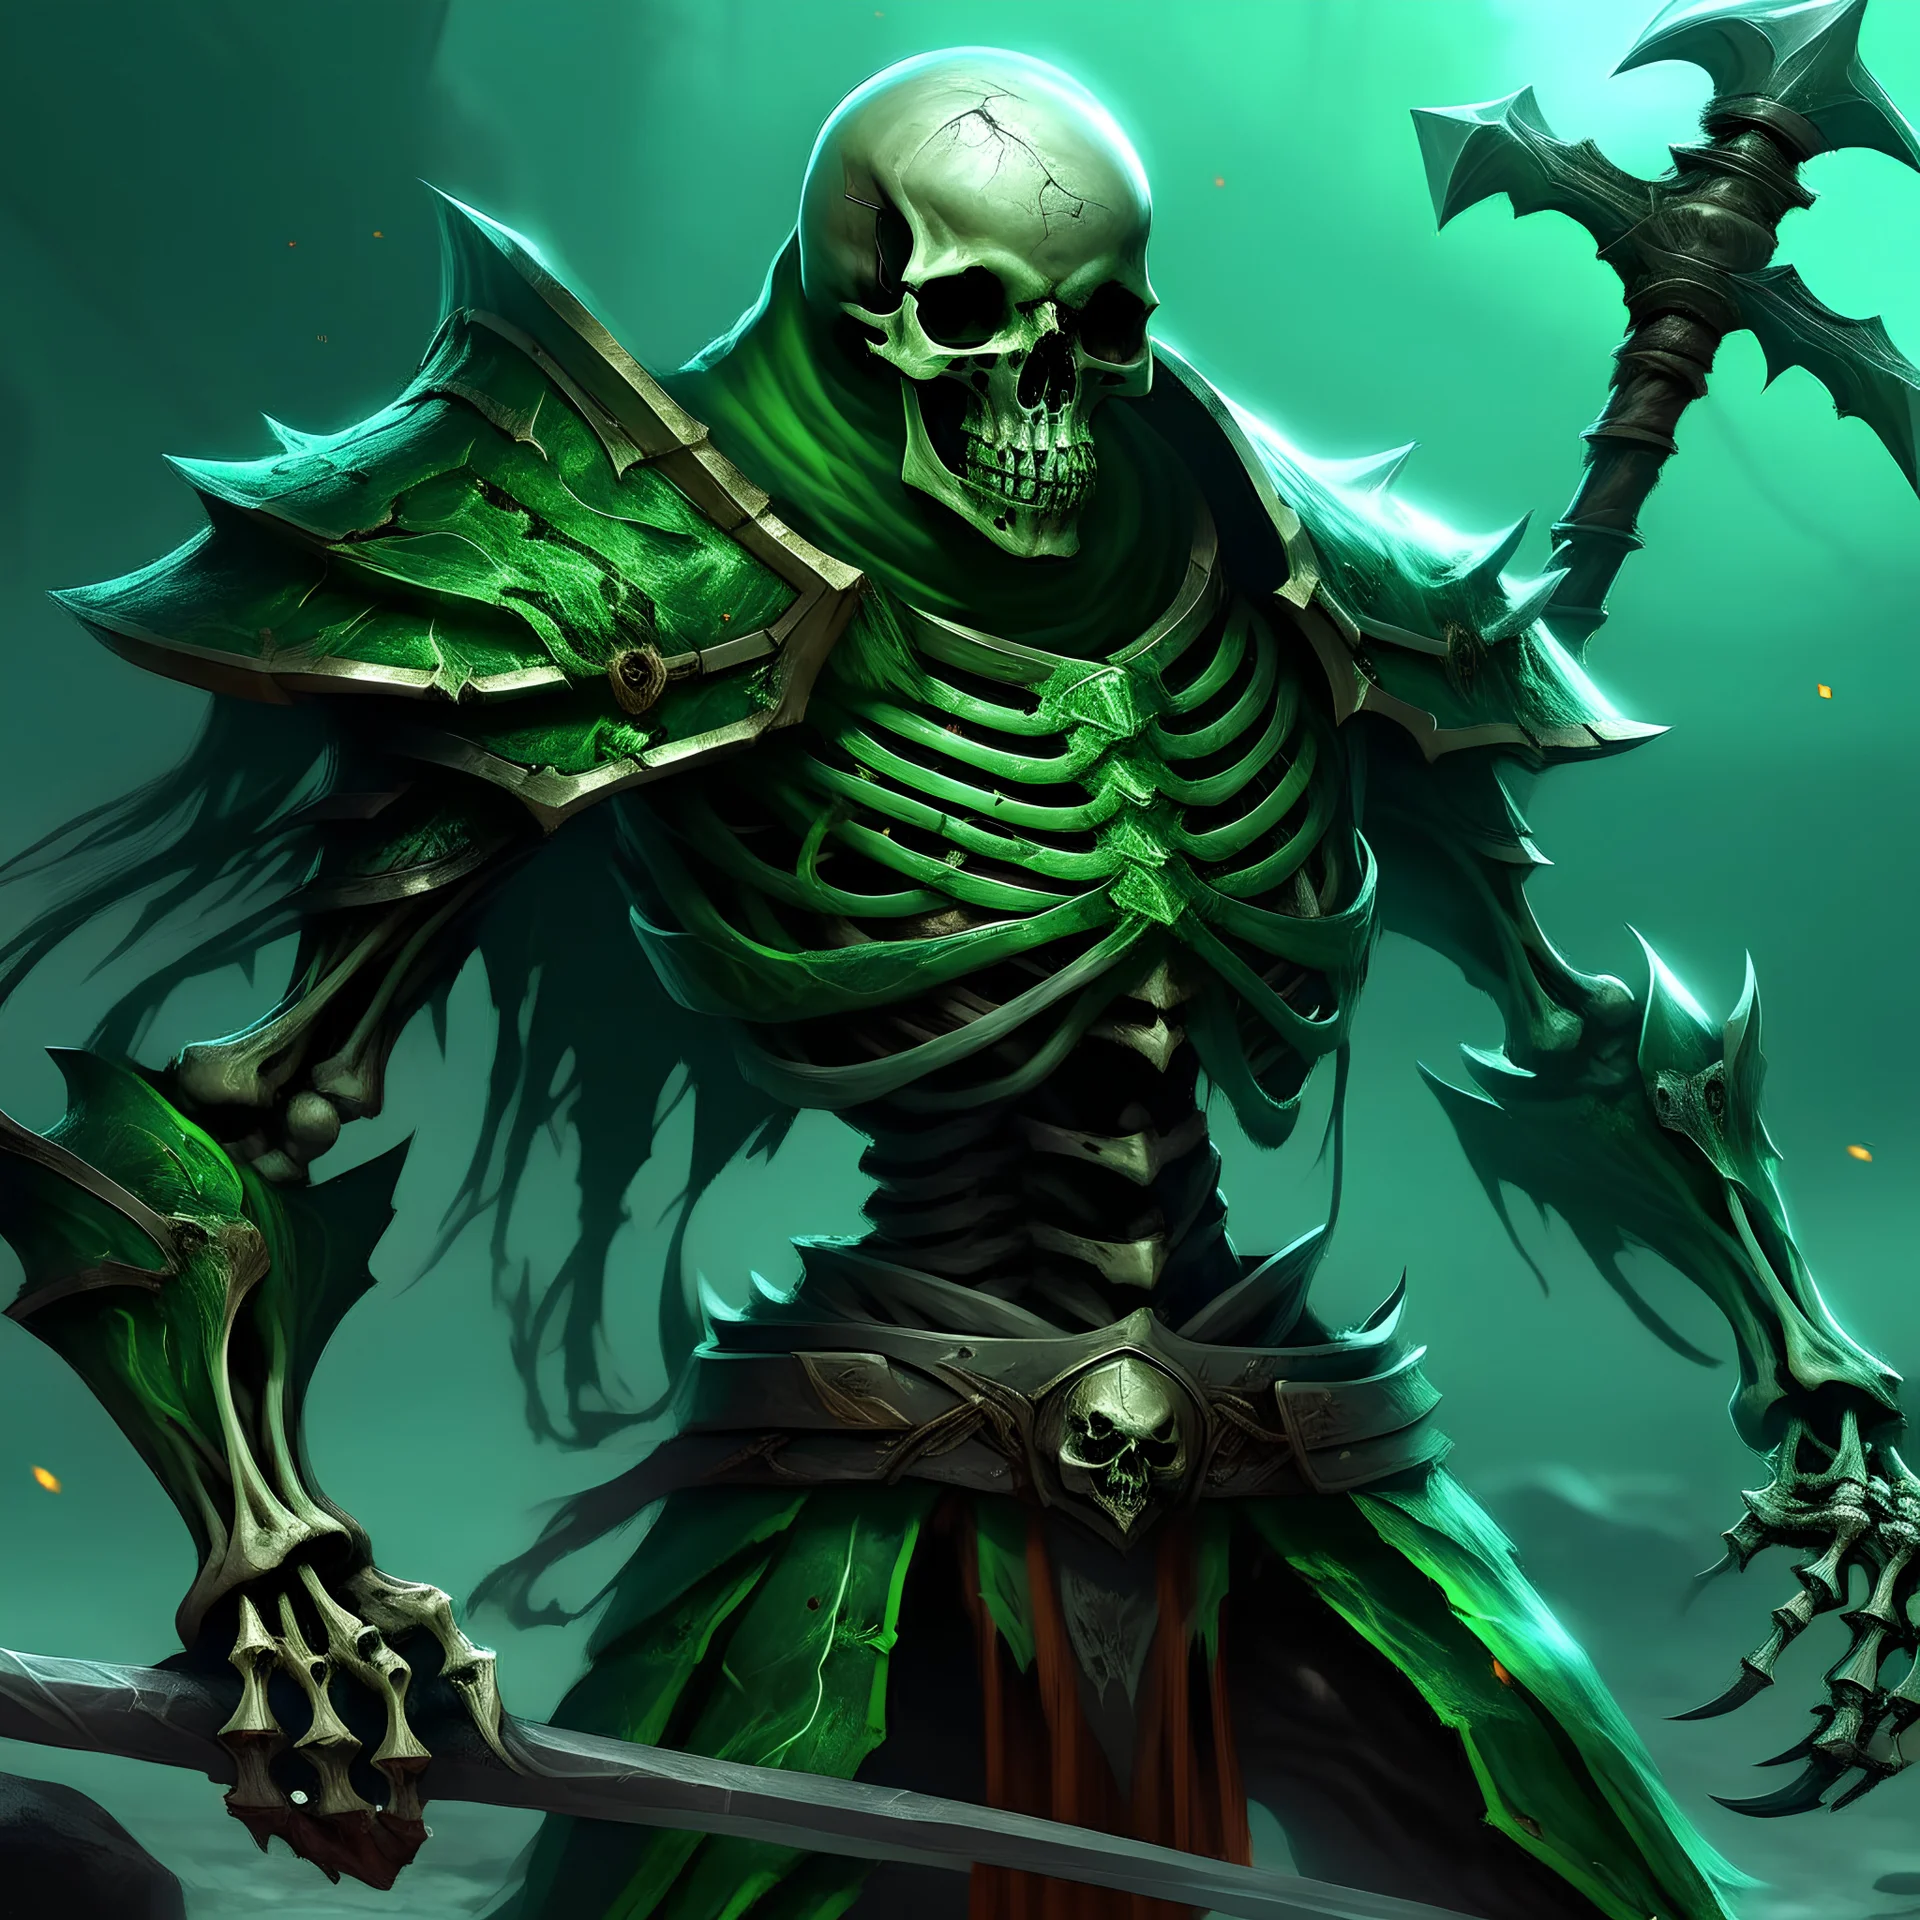 Green skeleton gravekeeper, heavy armour, legendary boss from a game, realistic, dangerous